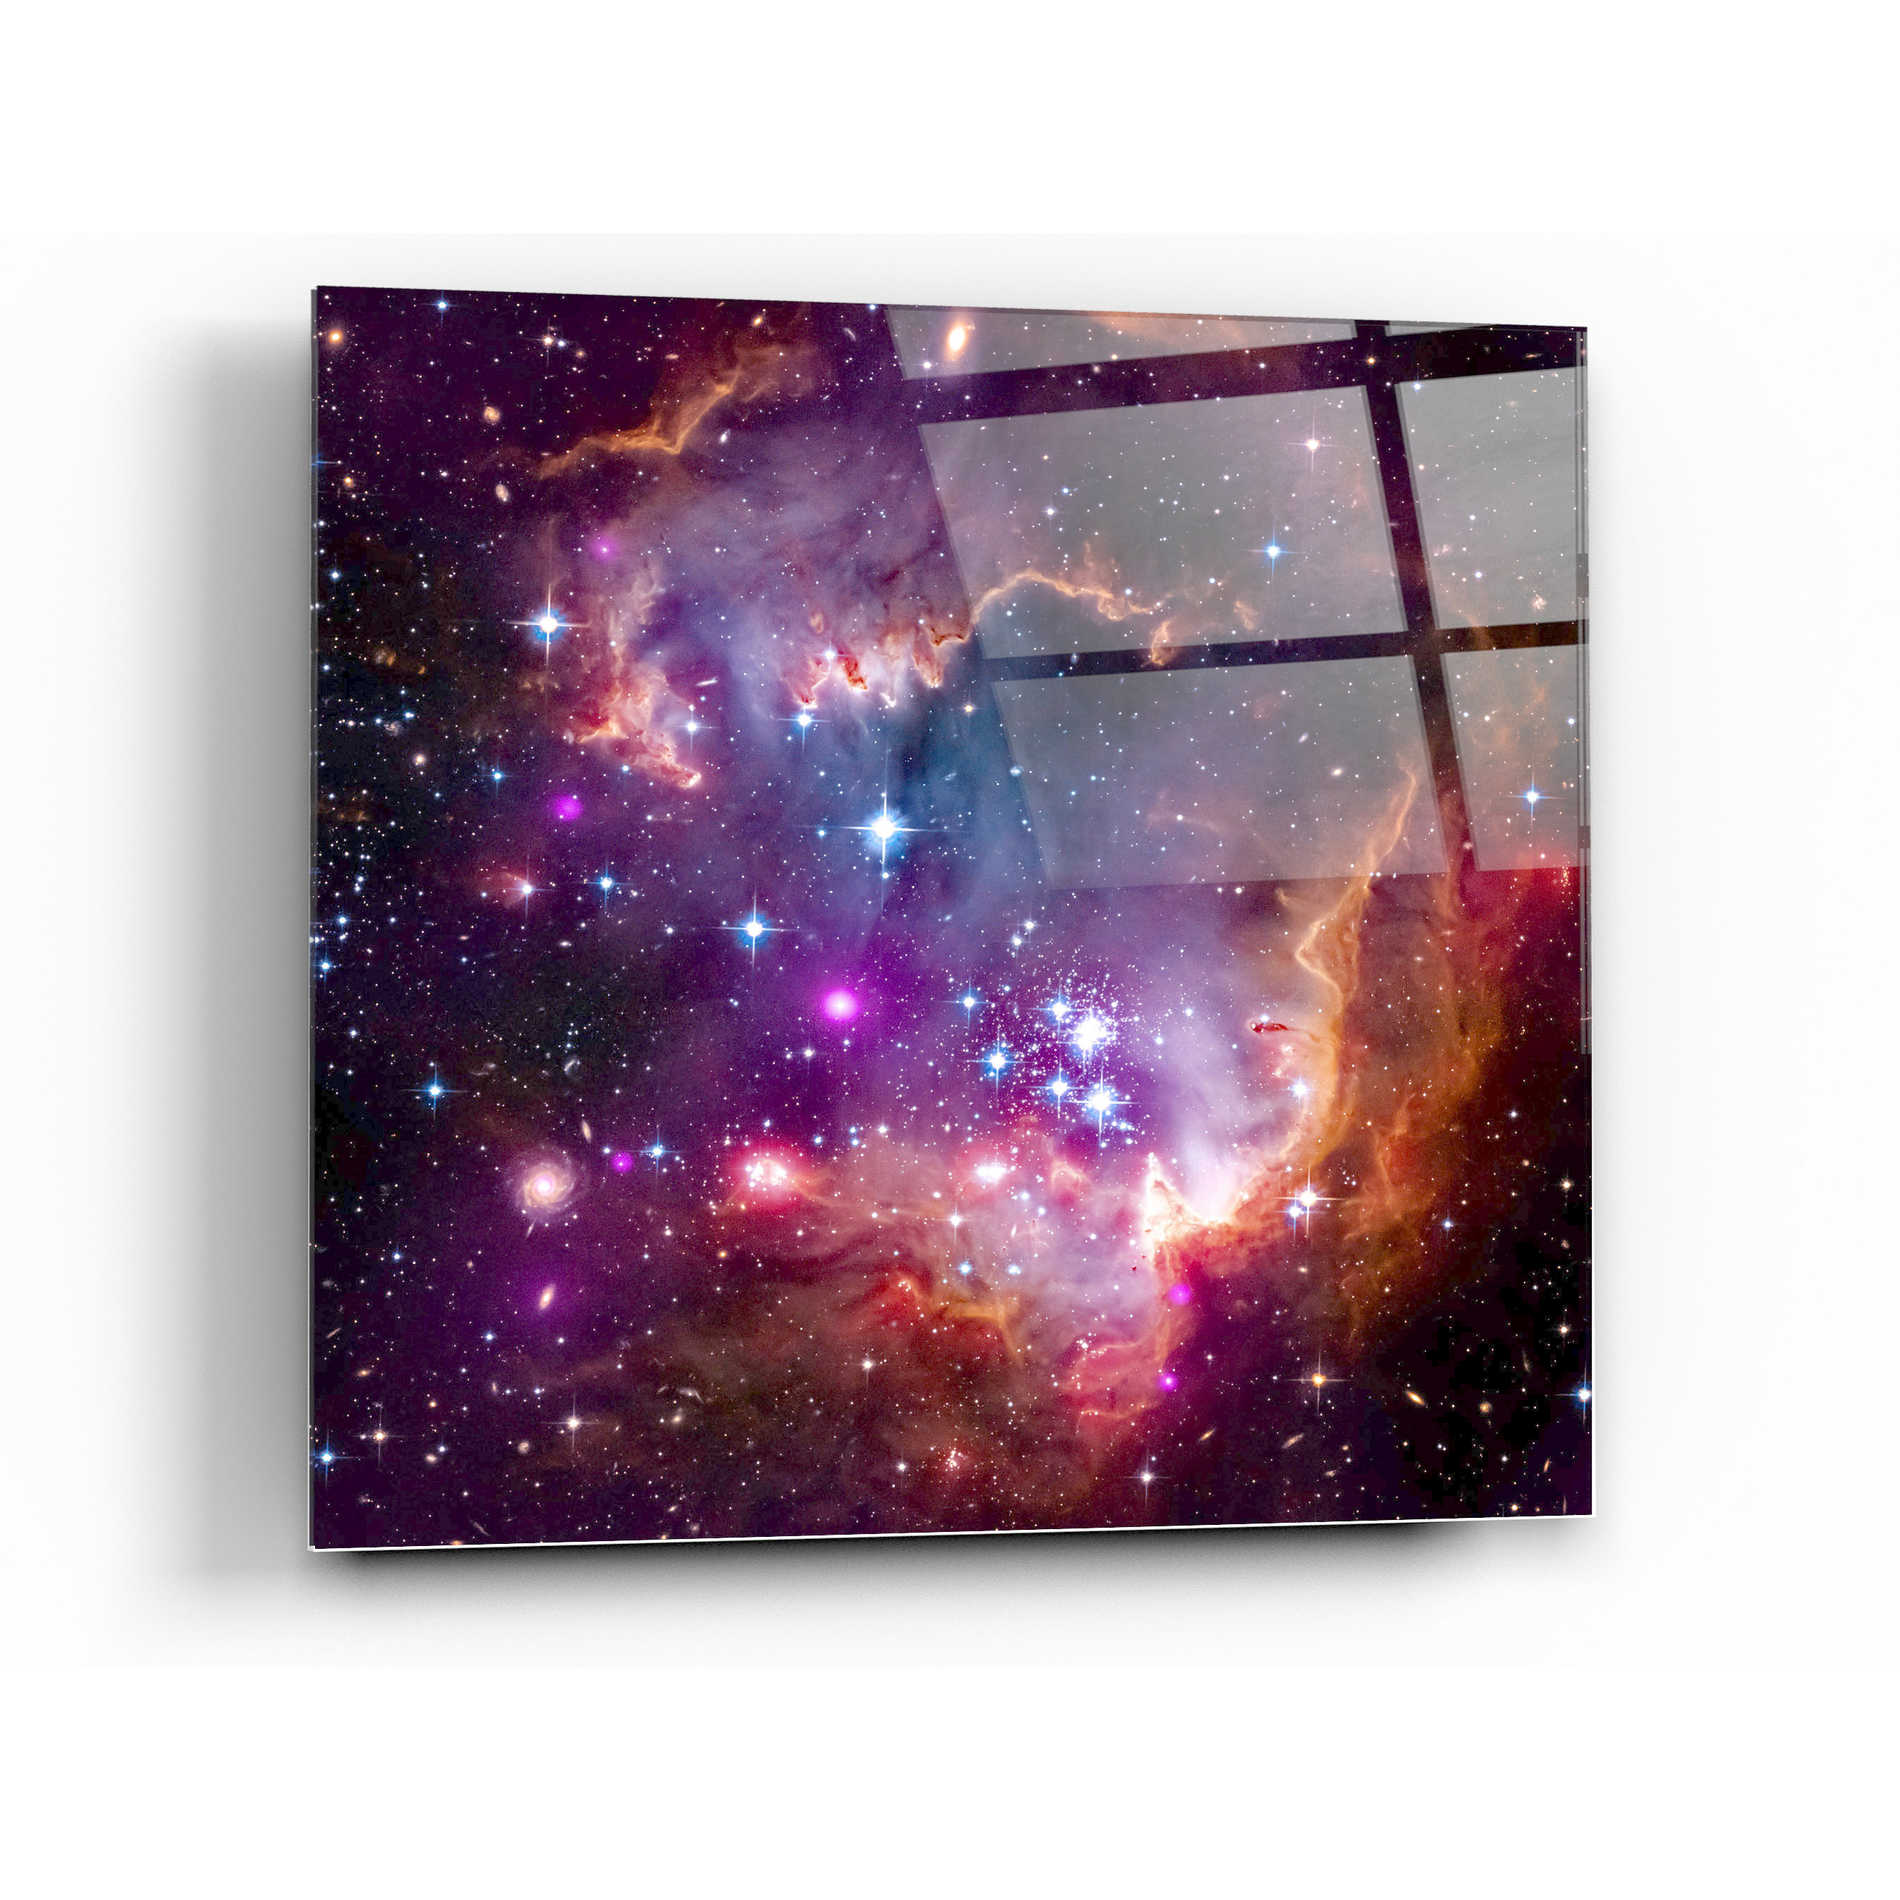 Epic Art "Magellanic Cloud" Hubble Space Telescope Acrylic Glass Wall Art,24x24